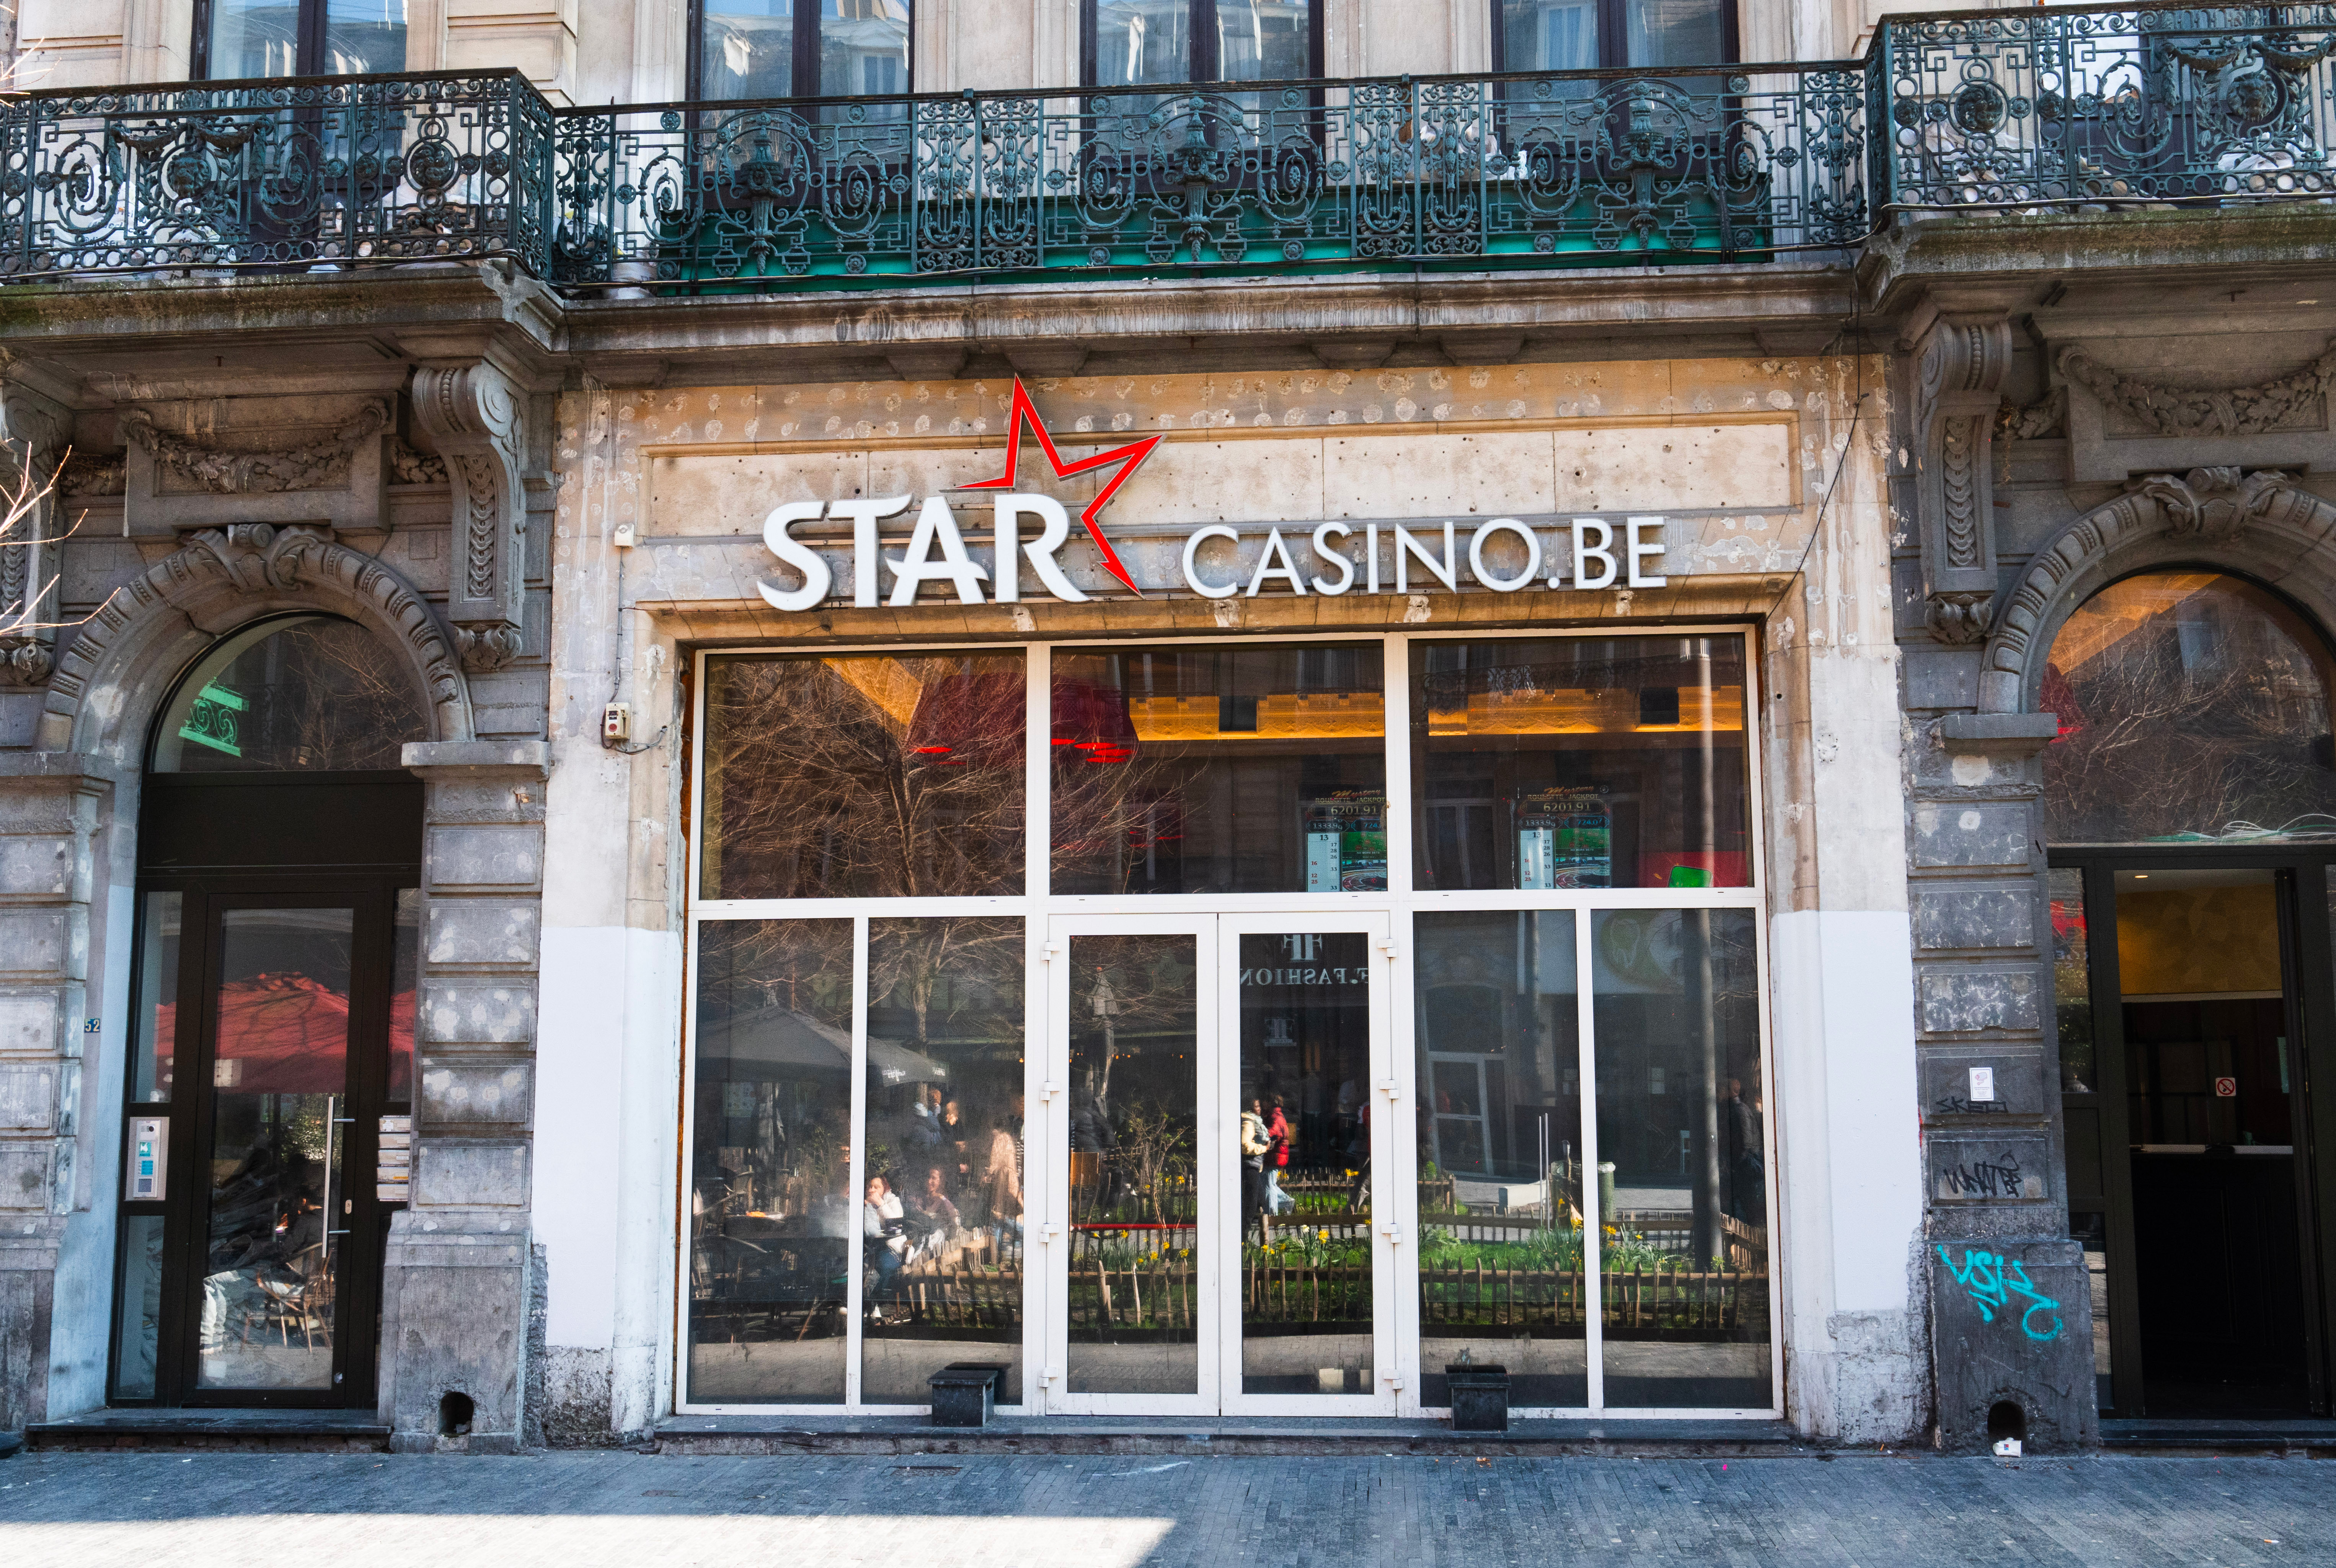 Starcasino.be Brussels